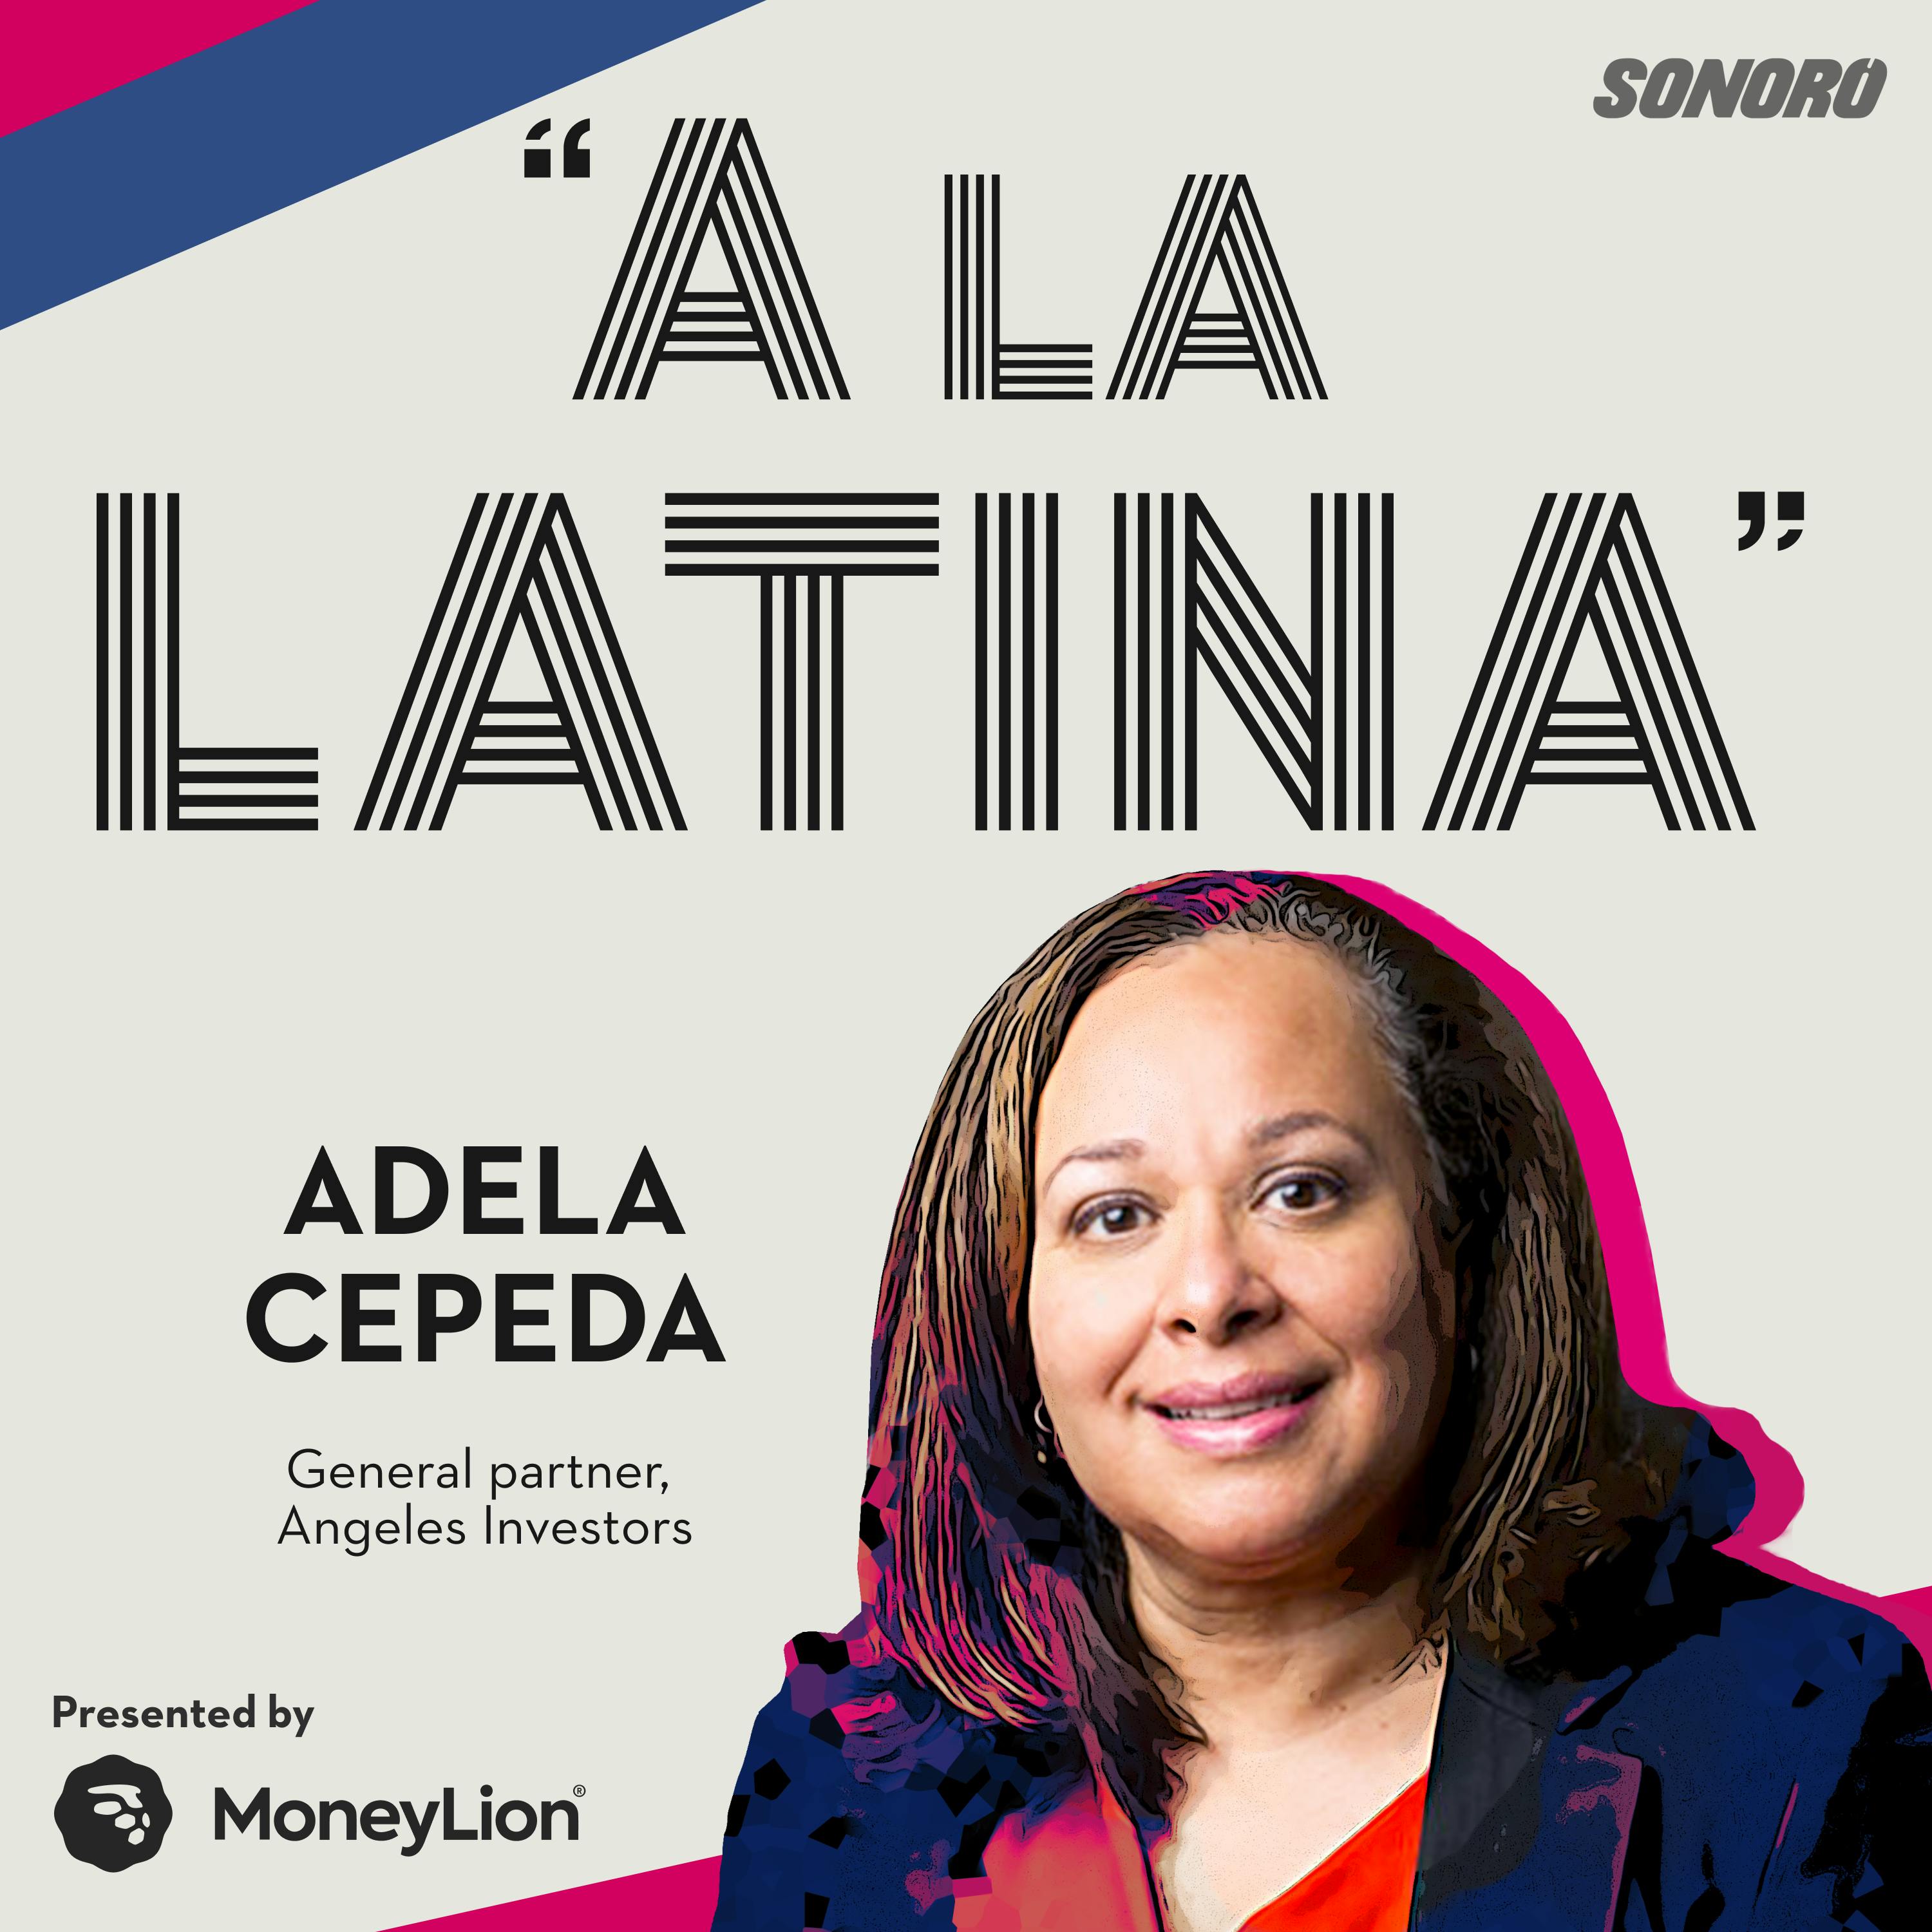 19 - Adela Cepeda / General Partner, Angeles Investors